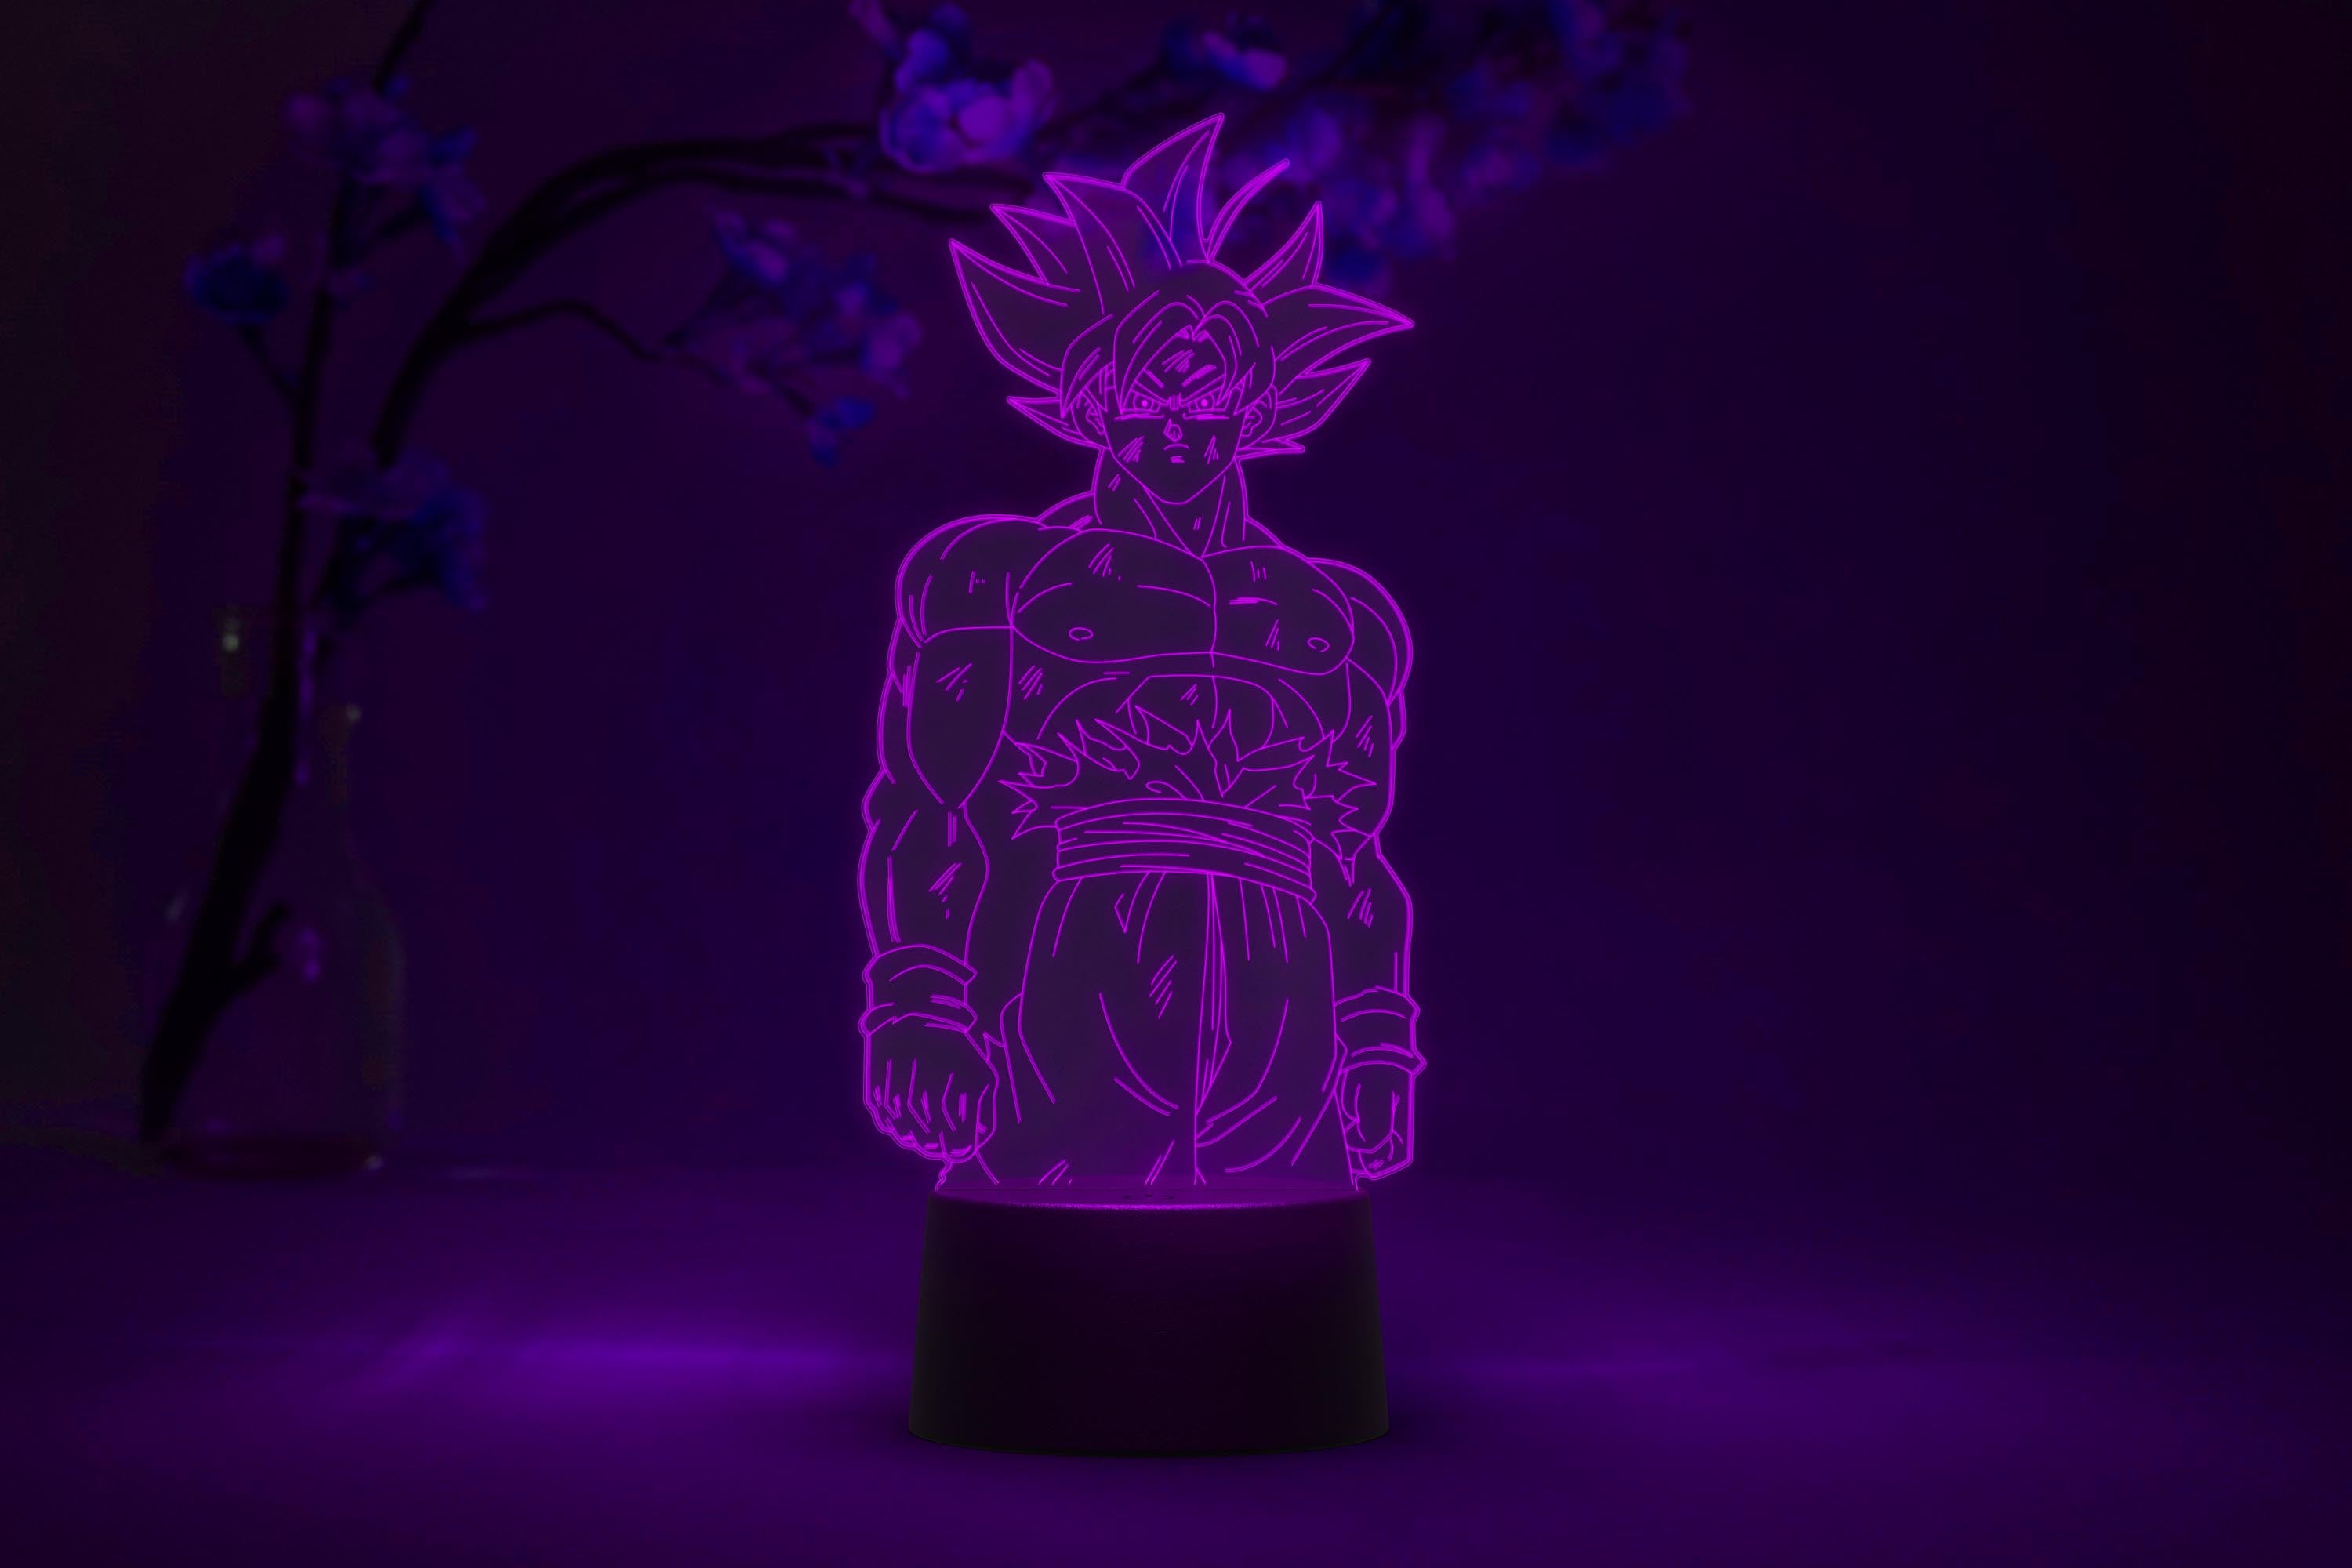 Goku Ultra Instinct Otaku Lamp (Dragon Ball Super)